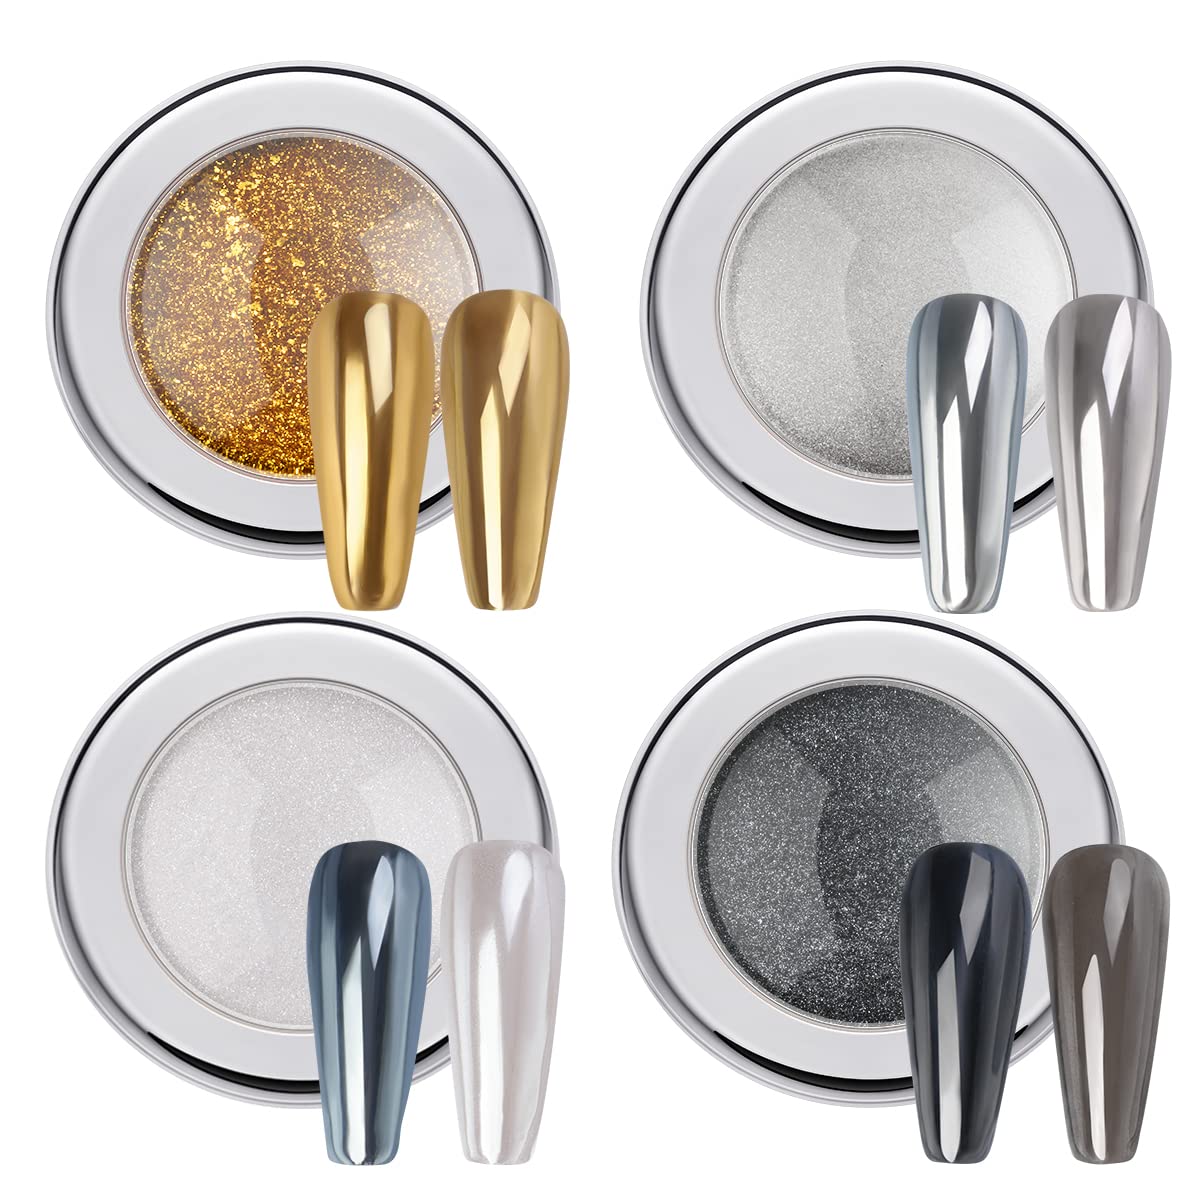 PrettyDiva Silver Chrome Nail Powder - Rose Gold Effect Mirror Nail Powders  Pure Metallic Chrome Powder Manicure